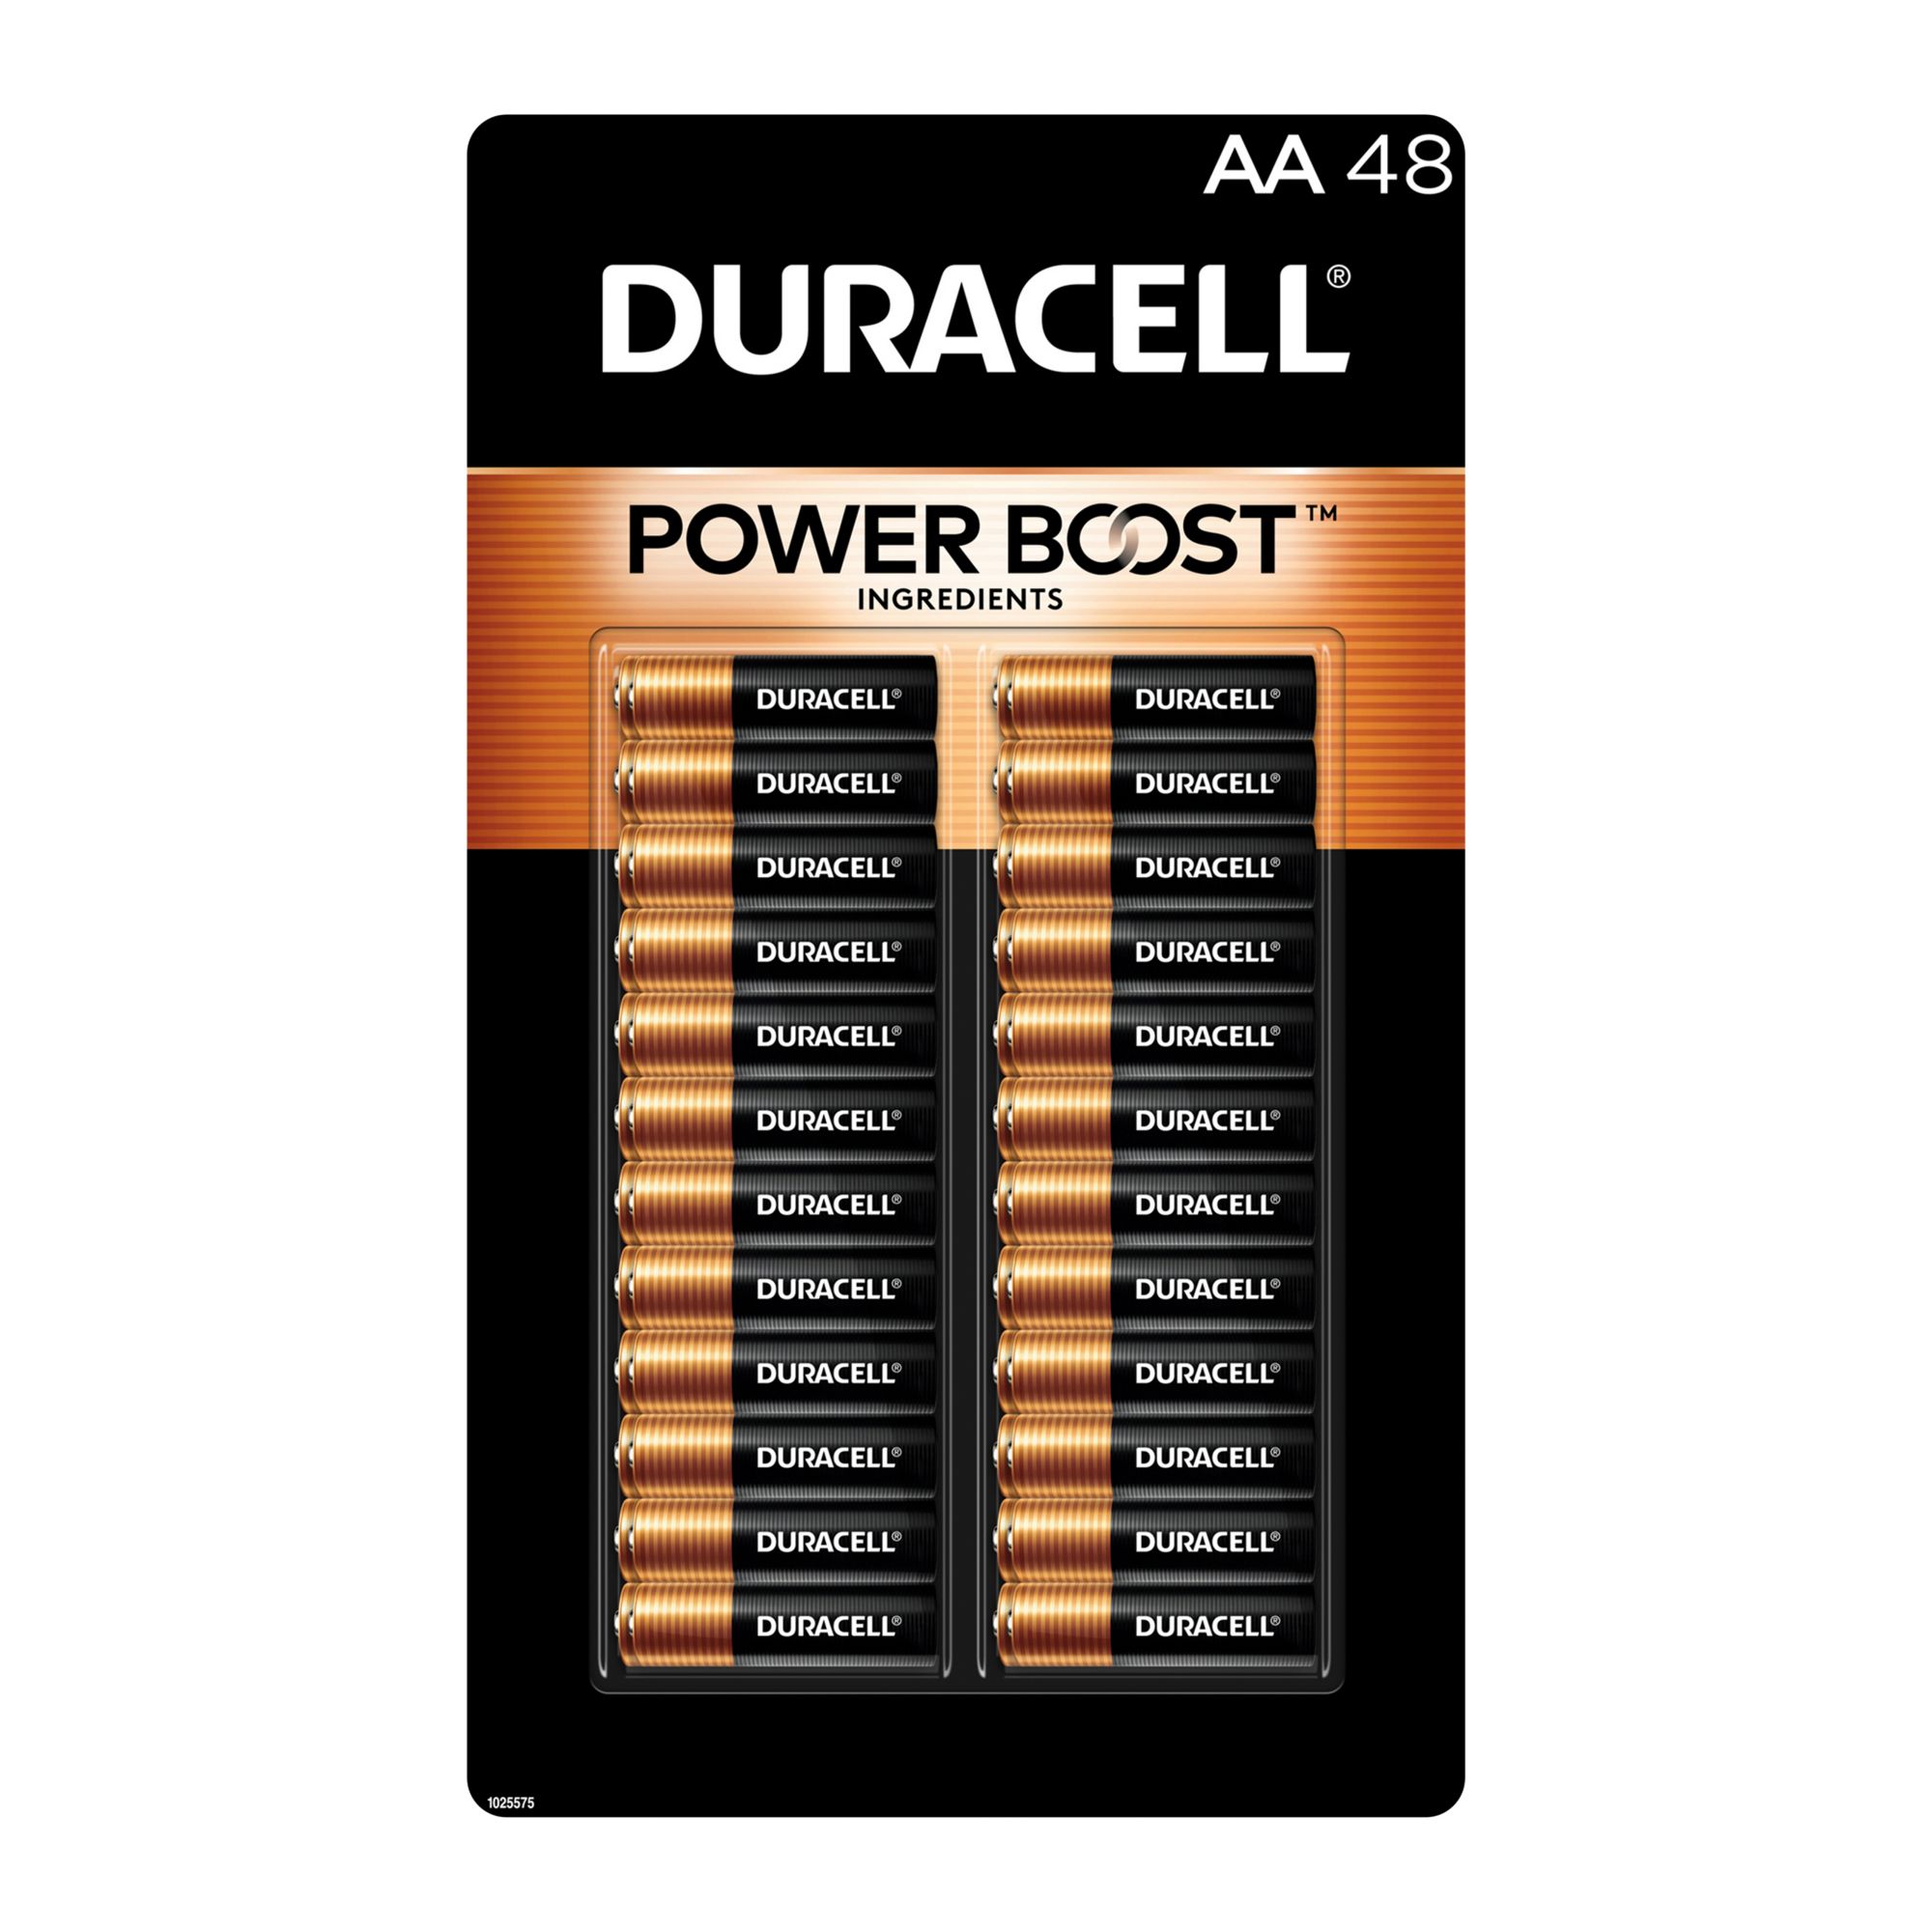 Duracell Optimum AAA alkaline Batteries, 22 ct.